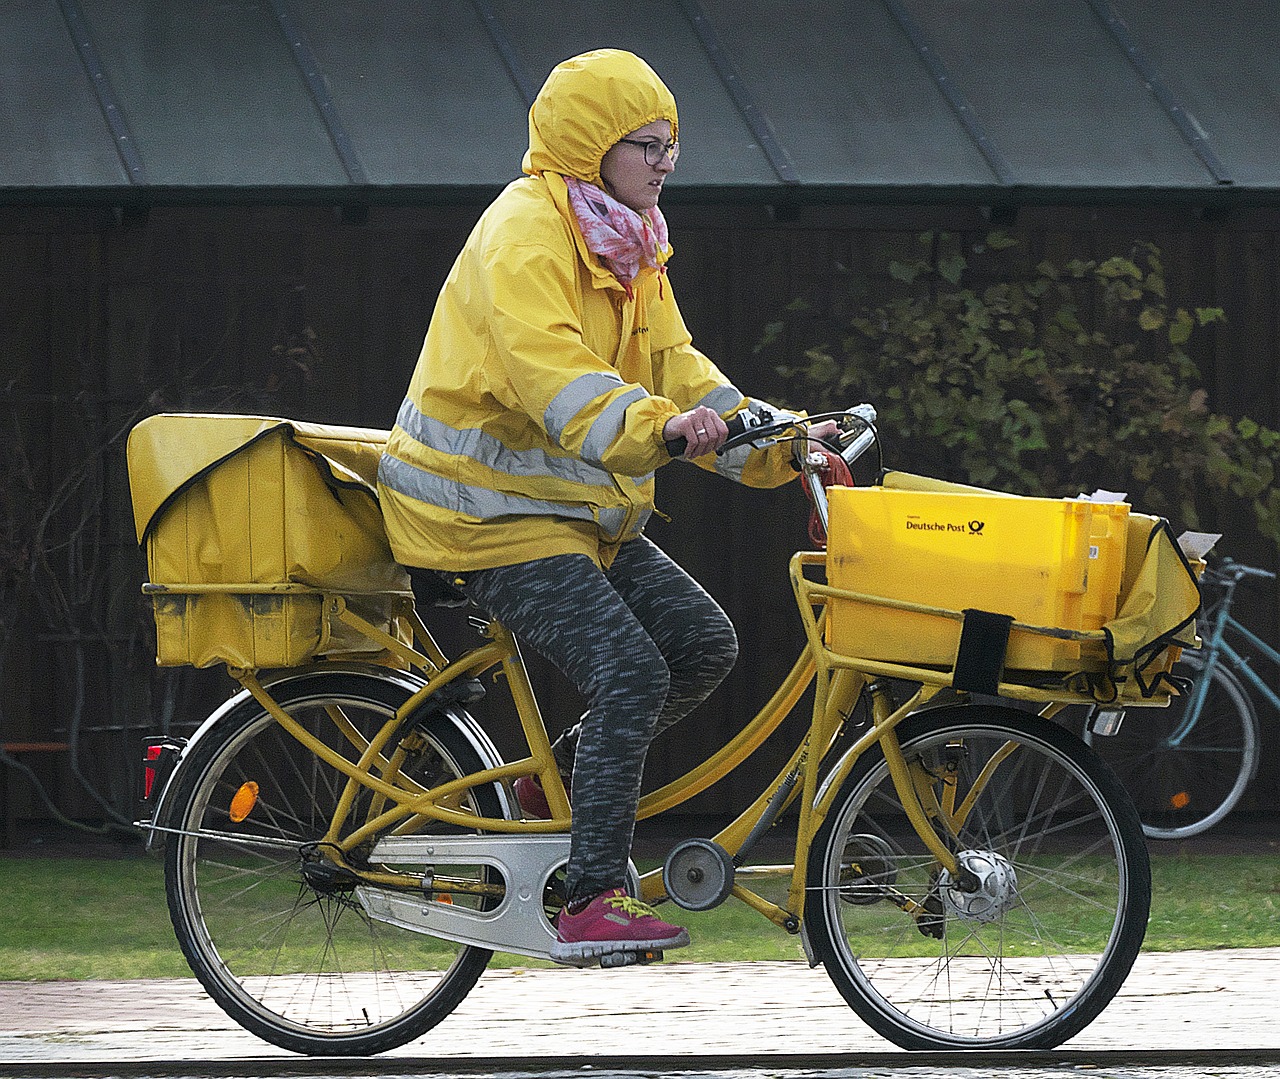 Postbotin auf dem Fahrrad. Foto: Wolfgang Eckert / Pixabay